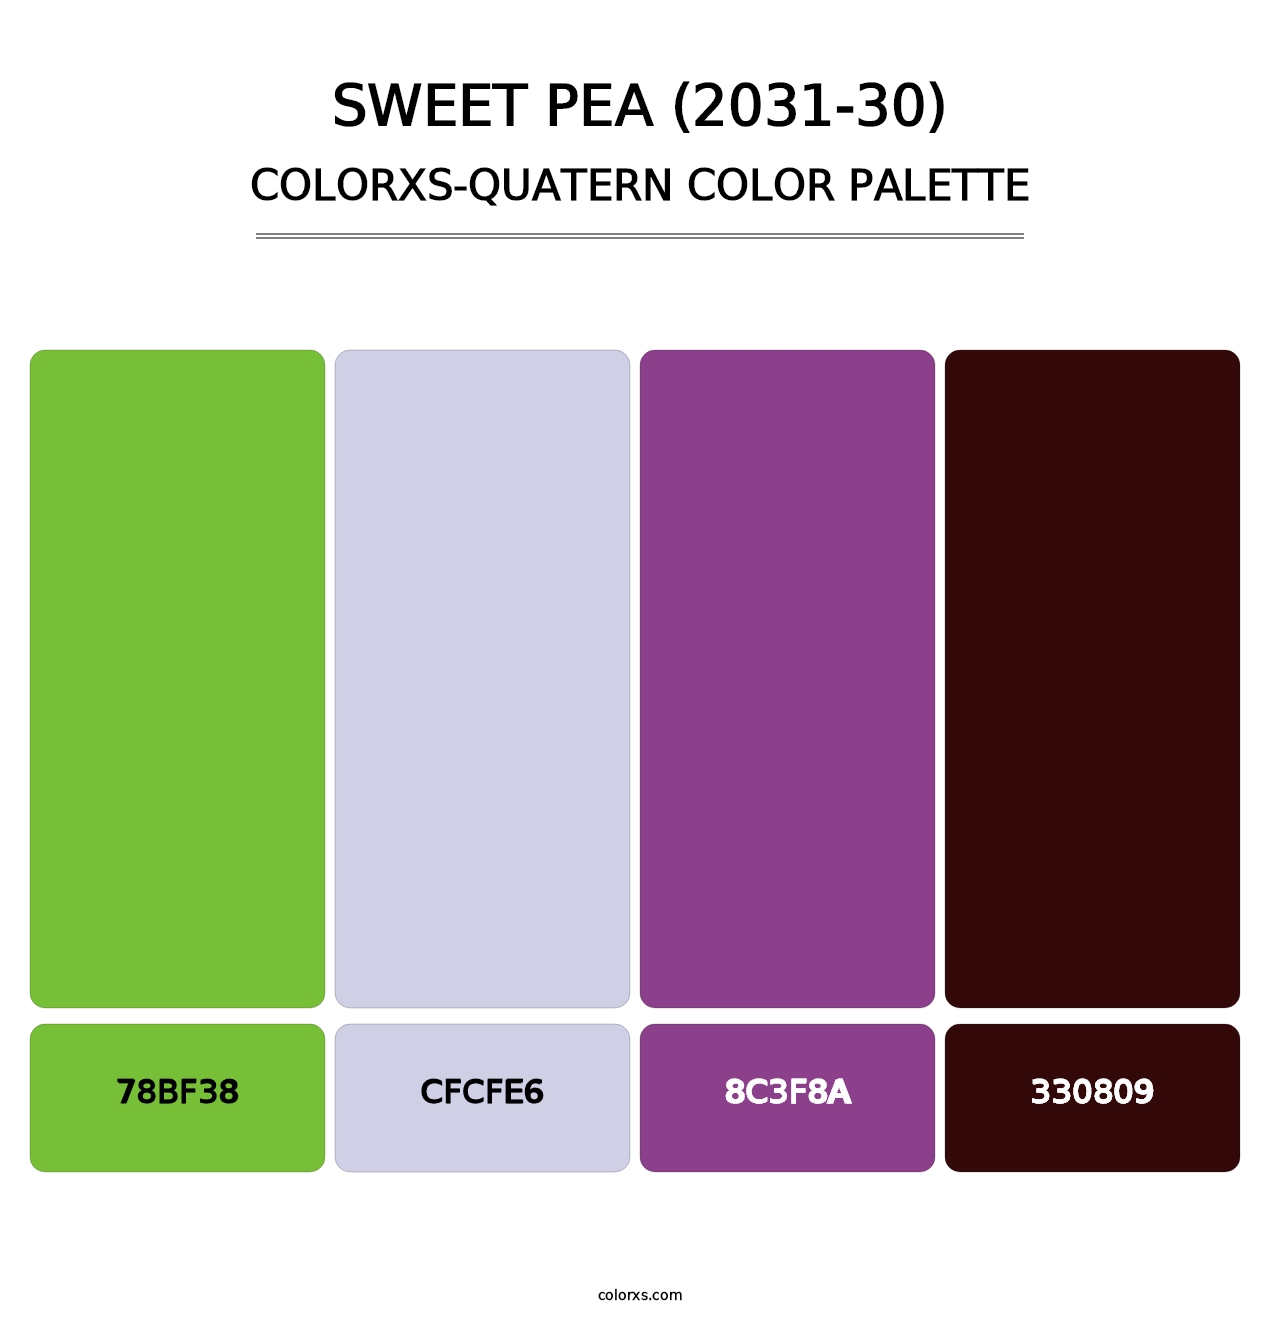 Sweet Pea (2031-30) - Colorxs Quatern Palette